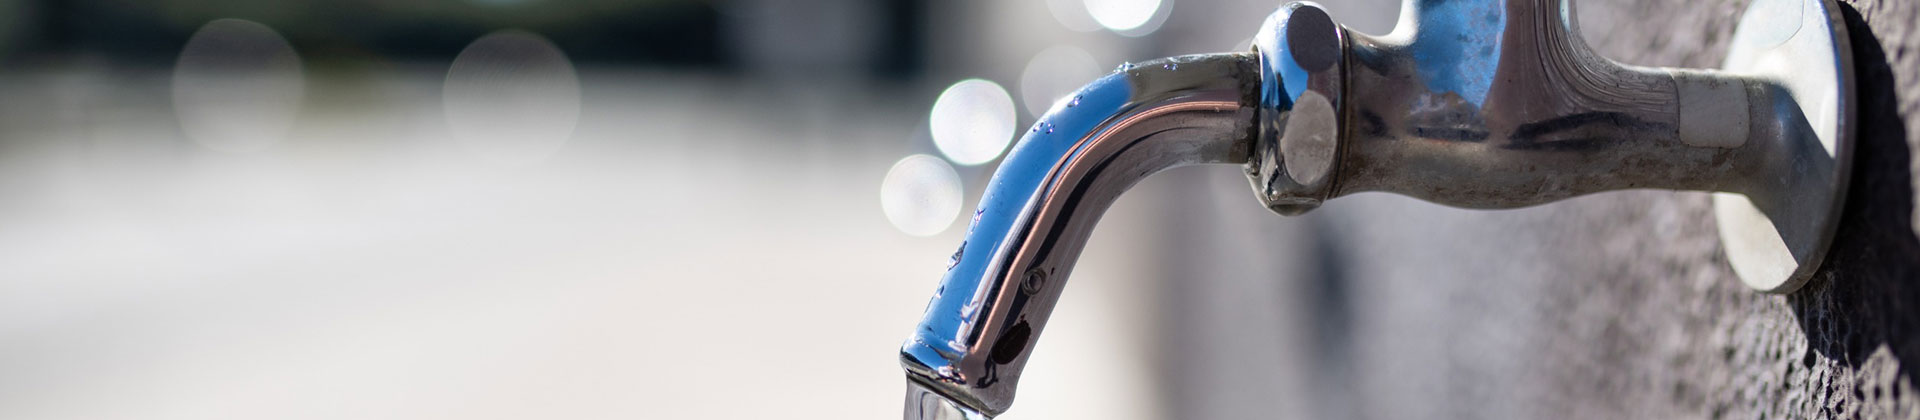 Closeup of Outdoor Water Faucet Running